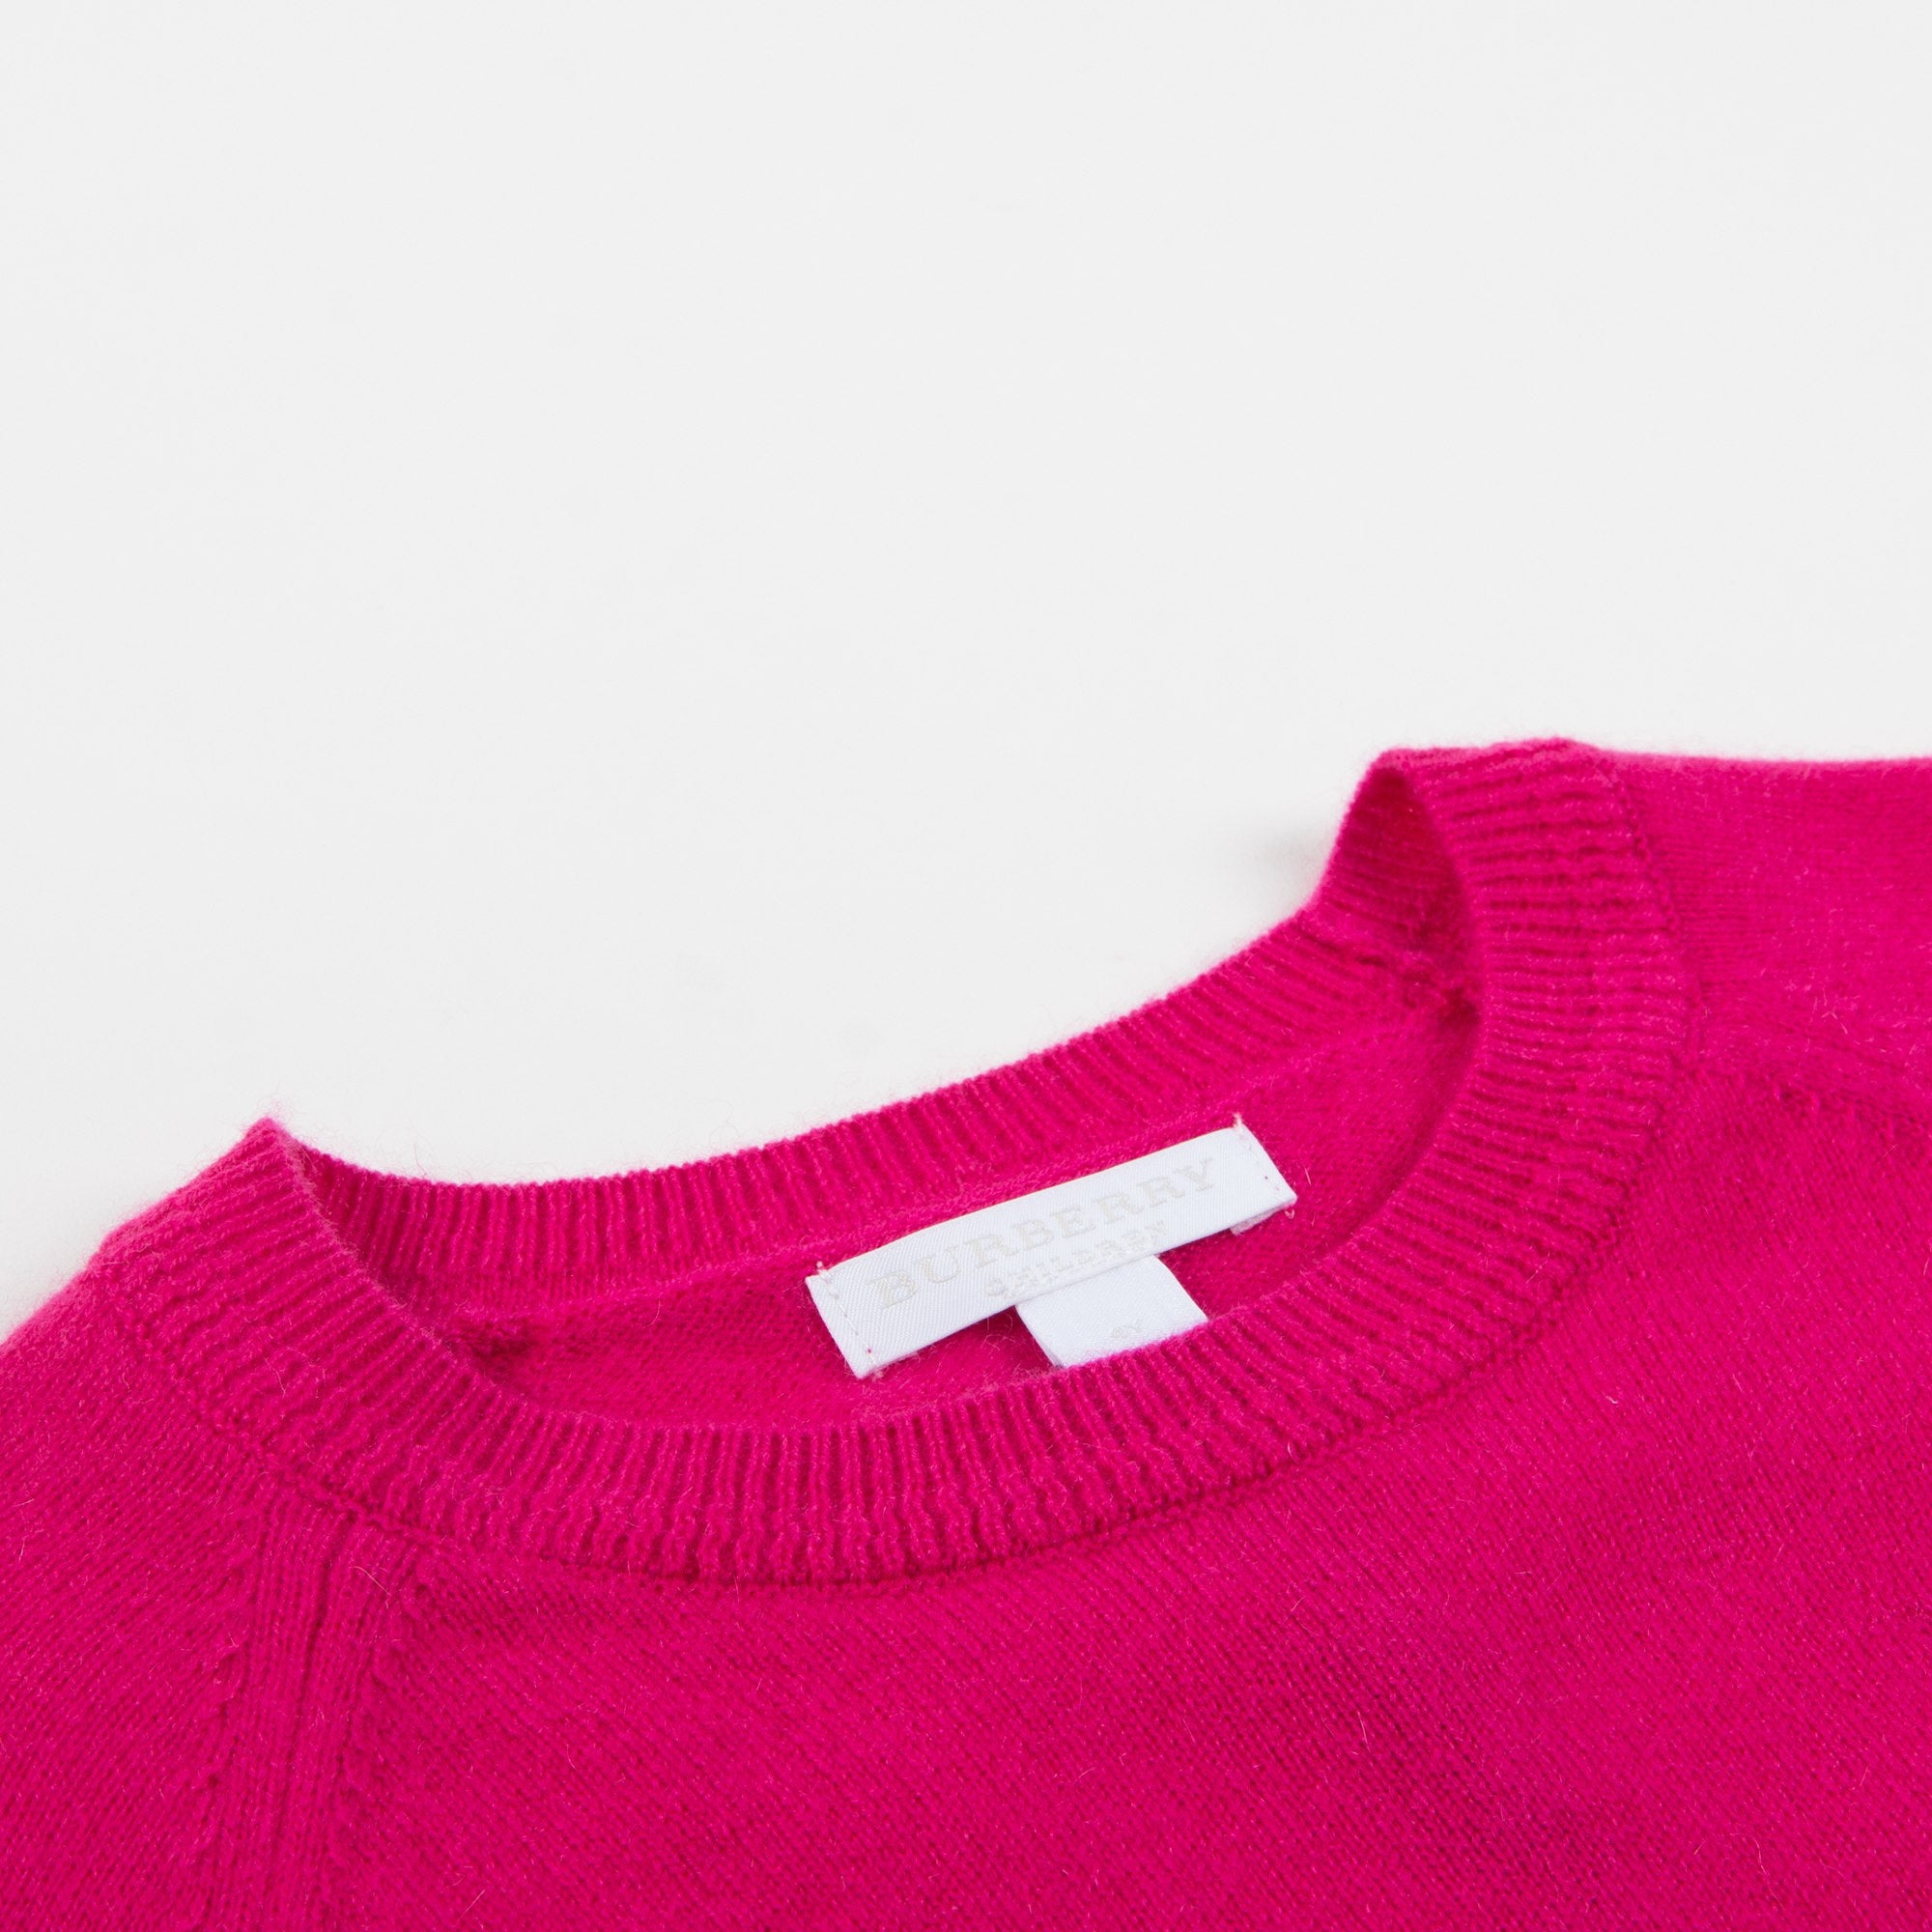 Girls  Bright  Crimson Pink  Cashmere   Sweater